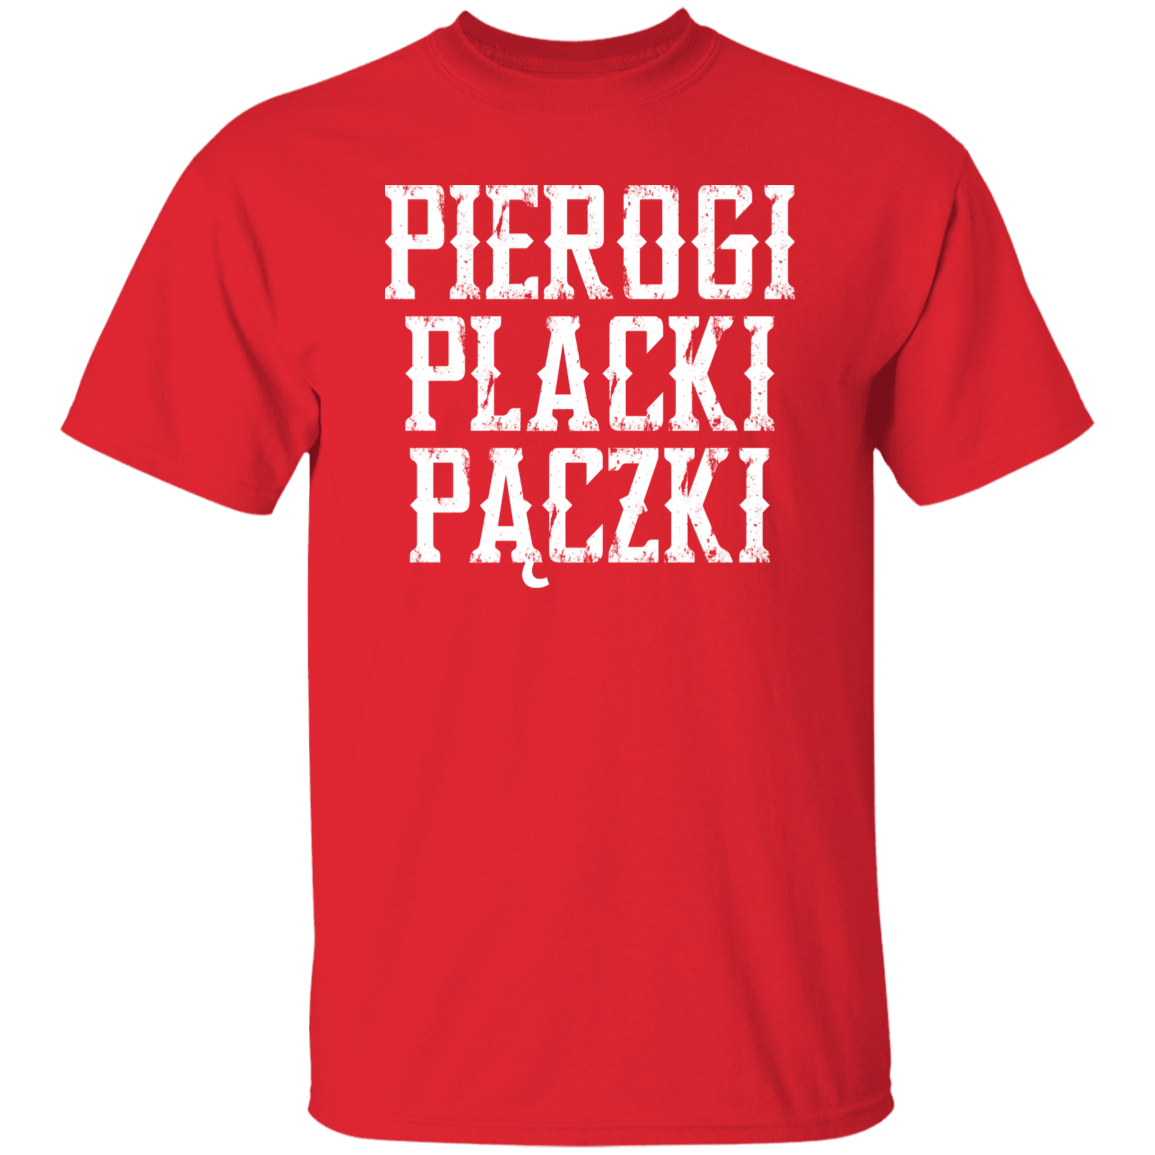 Pierogi Placzki Paczki Tongue-Twisting Tee Apparel CustomCat G500 5.3 oz. T-Shirt Red S